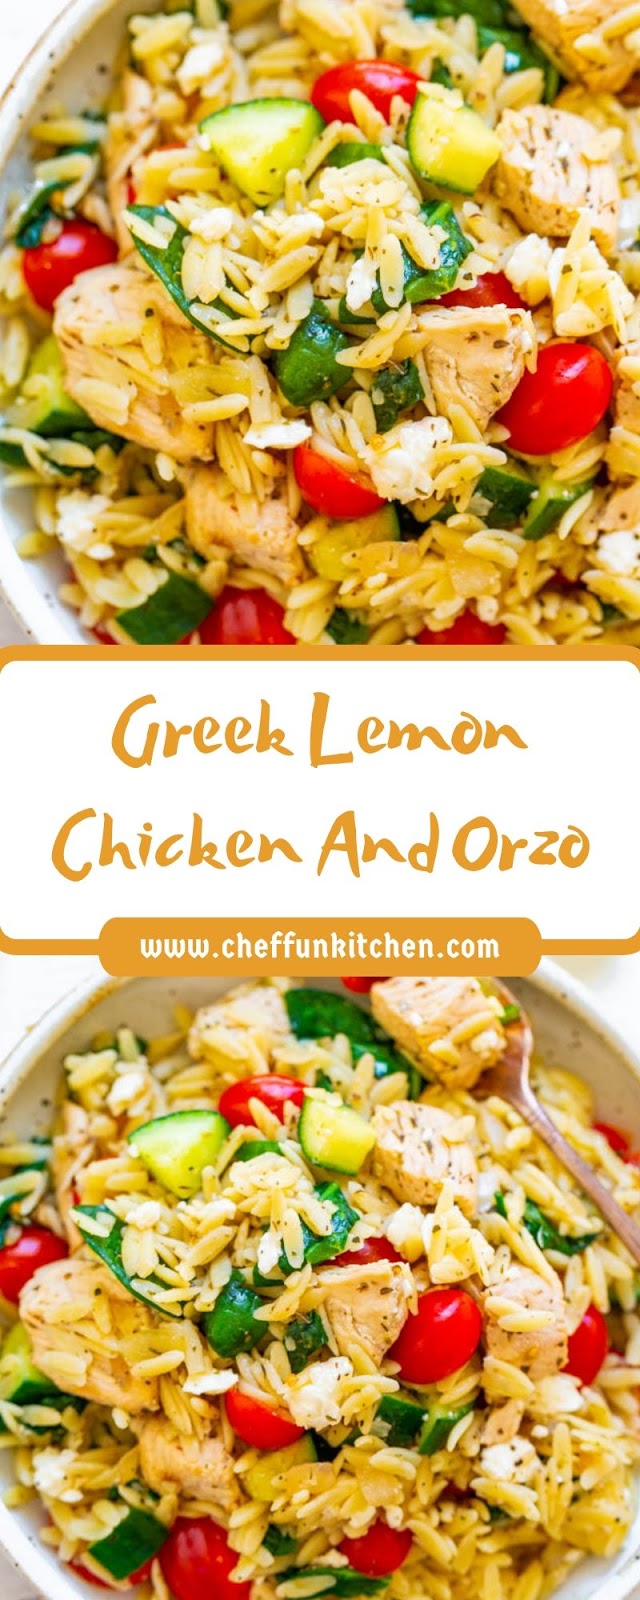 Greek Lemon Chicken And Orzo